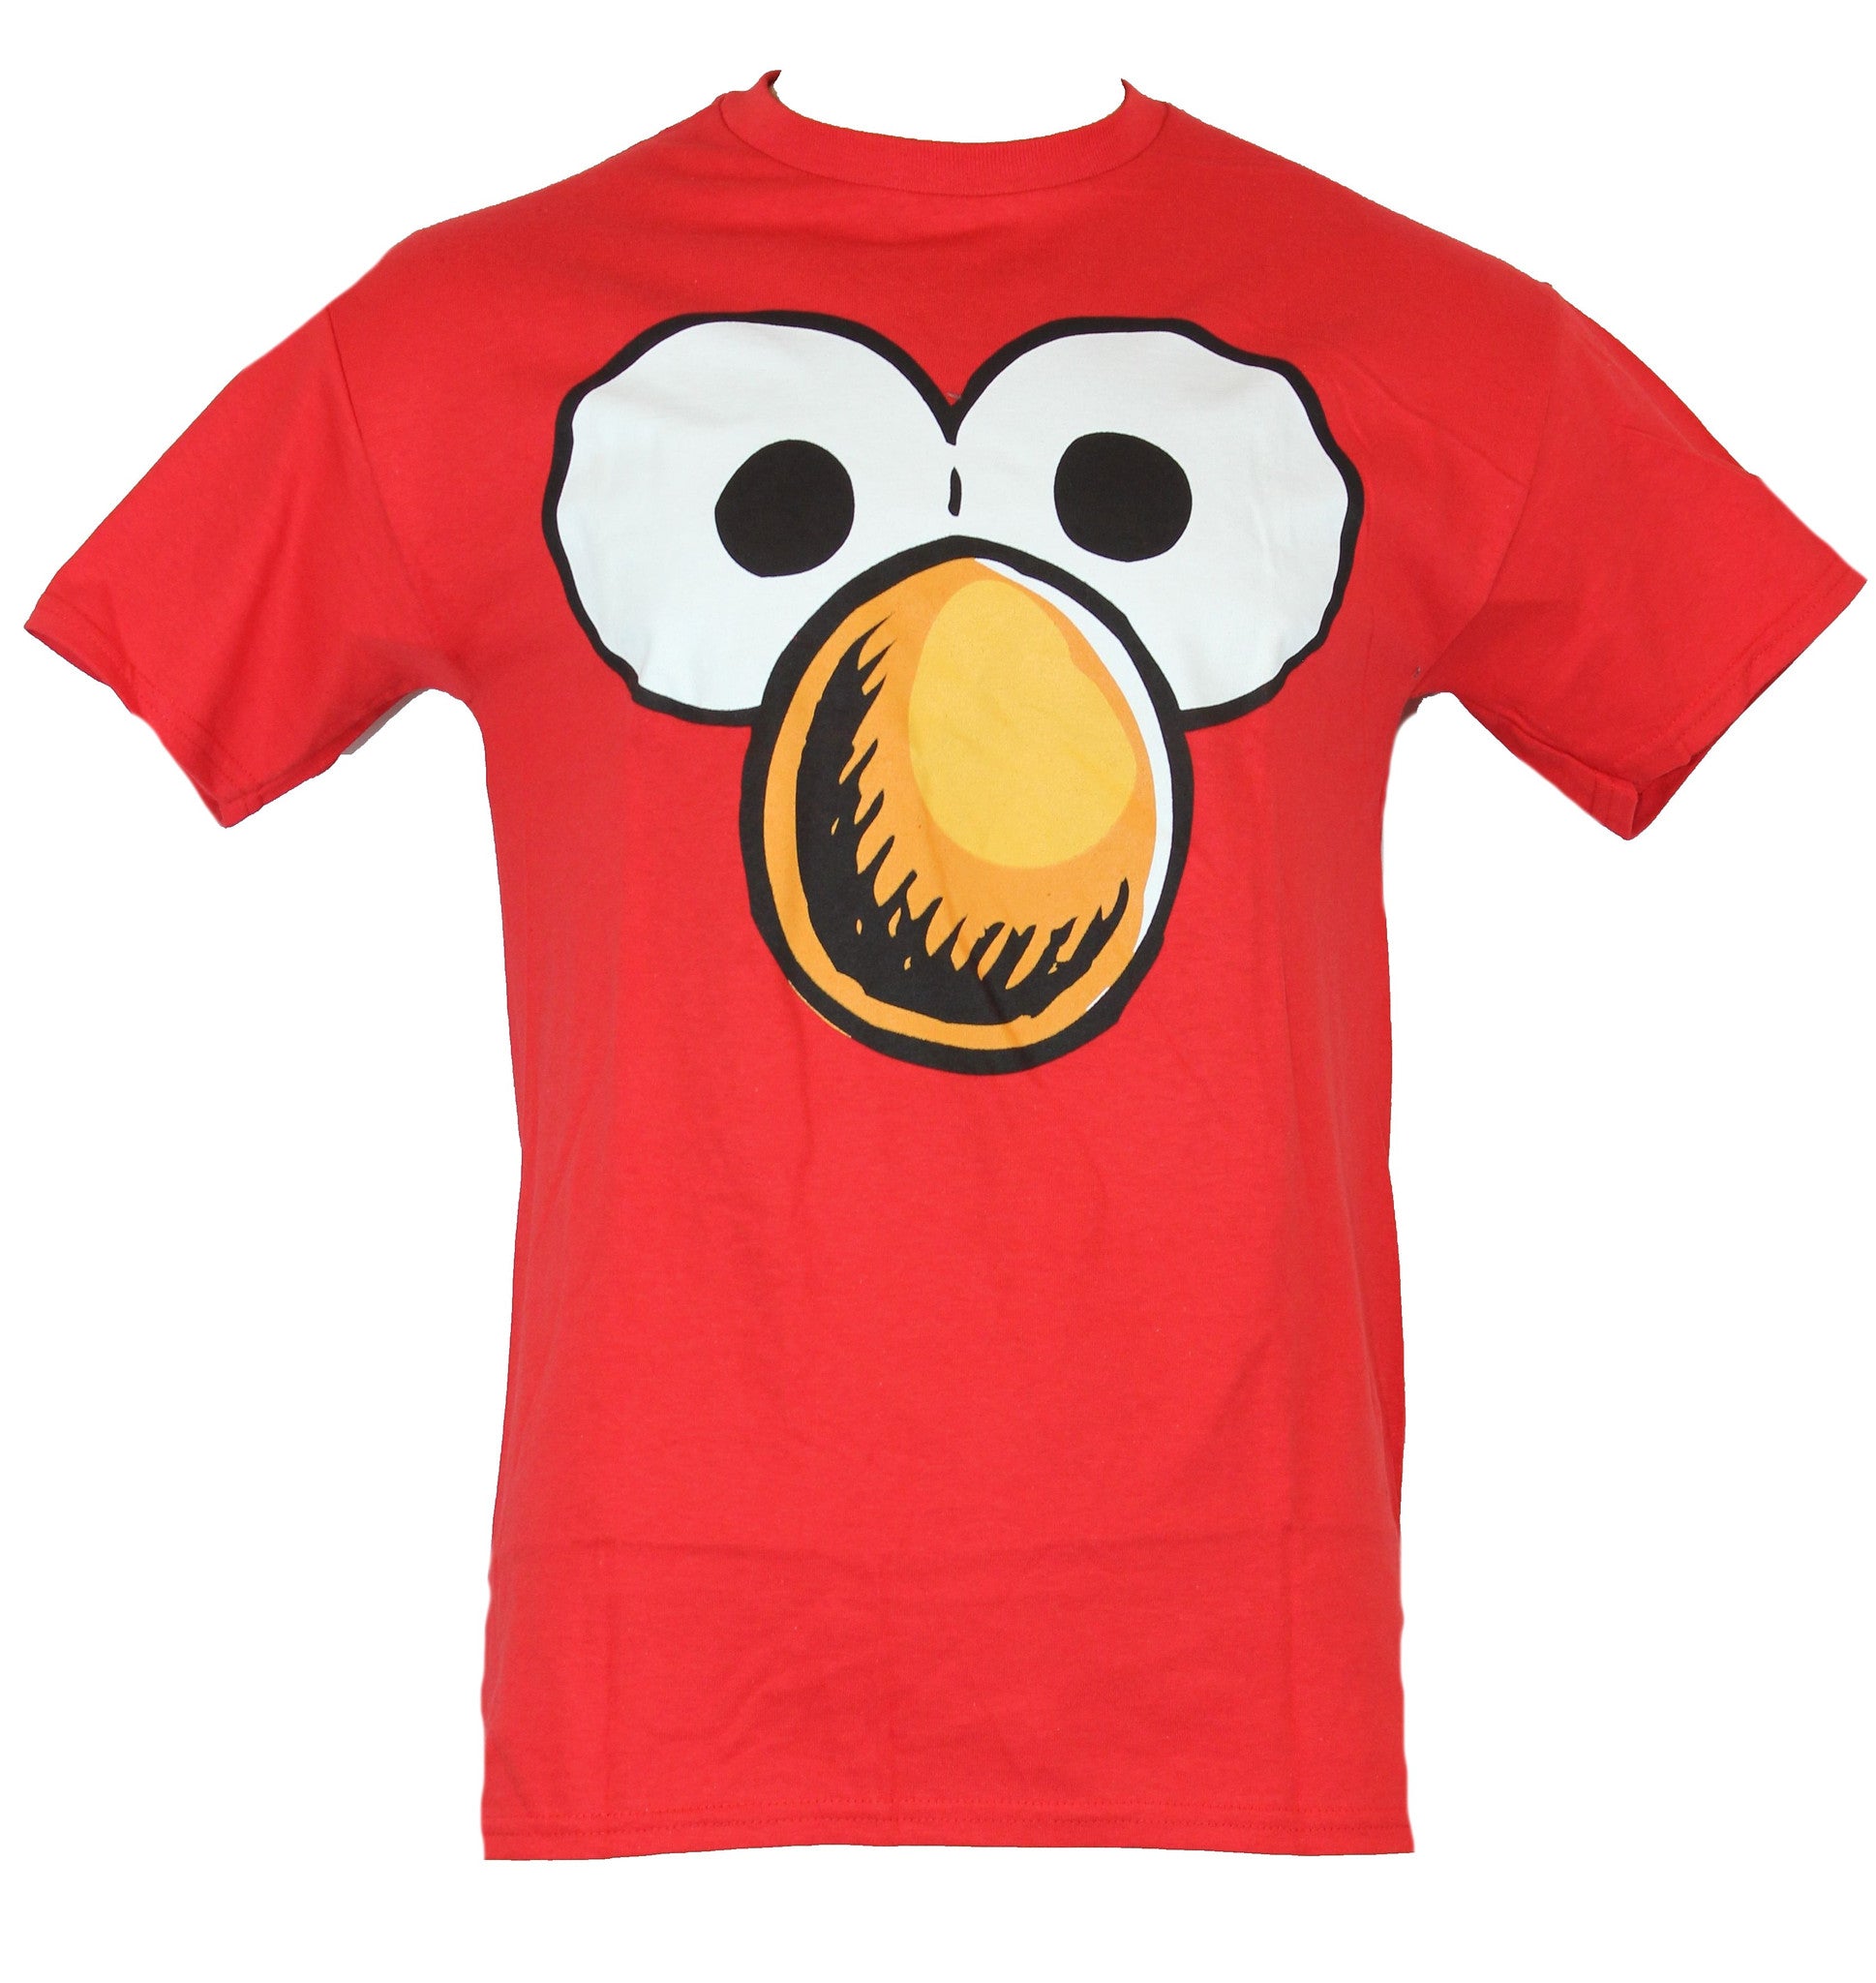 Sesame Street Mens T-Shirt -  Giant Elmo Eyes and Nose Image - Inmyparentsbasement.com